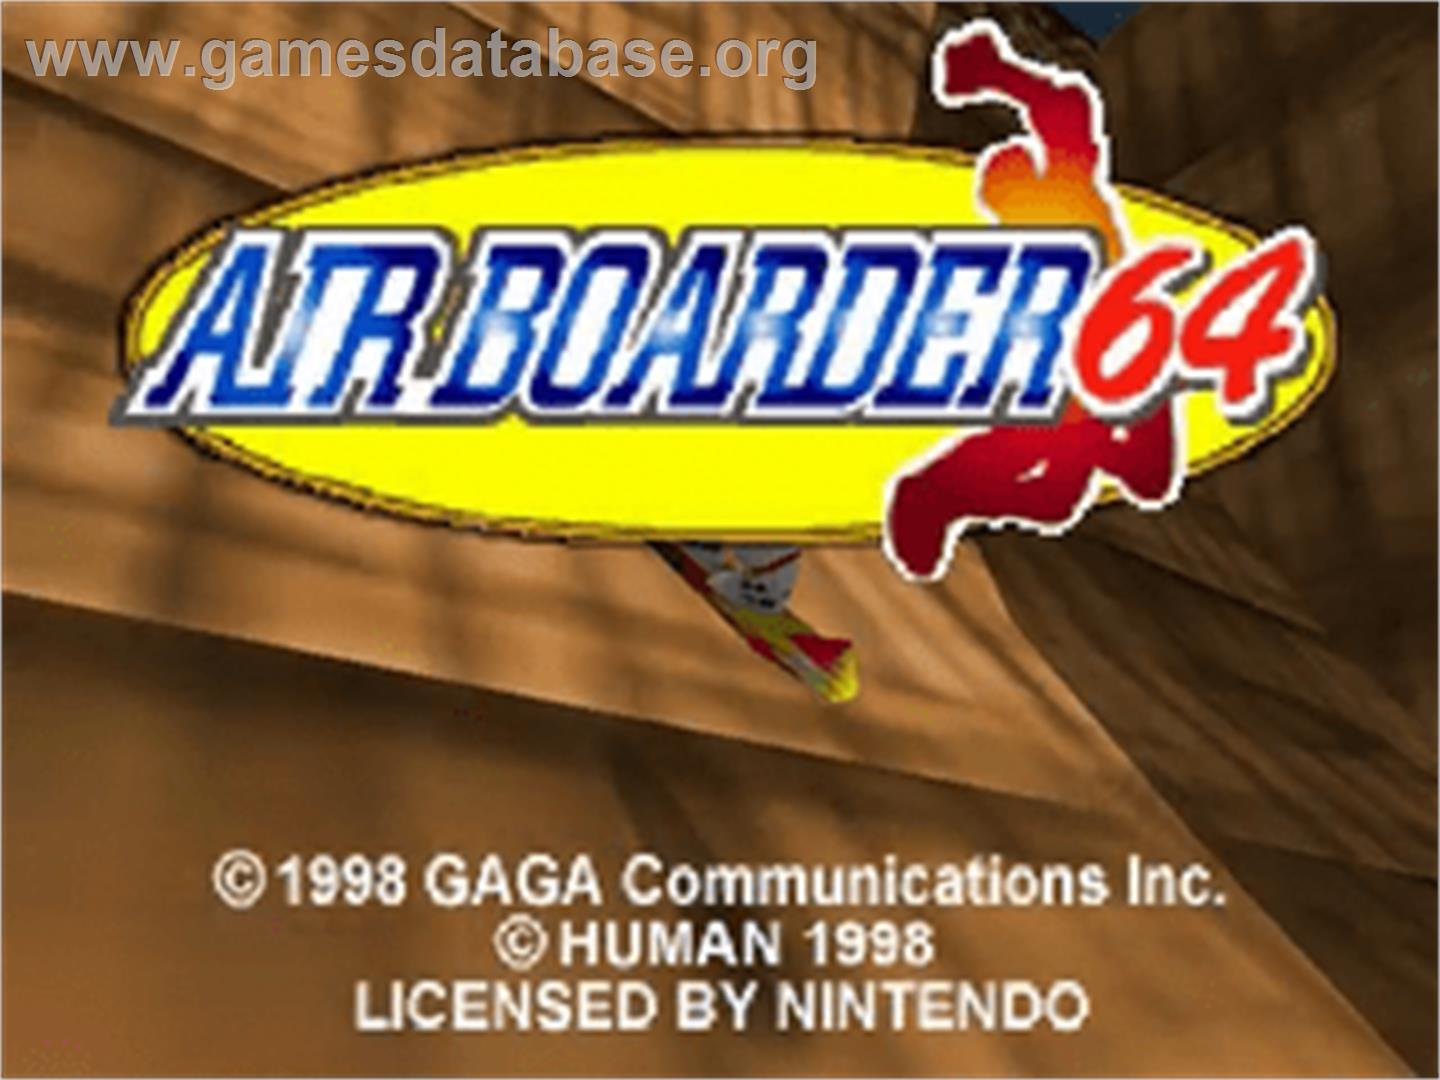 Air Boarder 64 - Nintendo N64 - Artwork - Title Screen